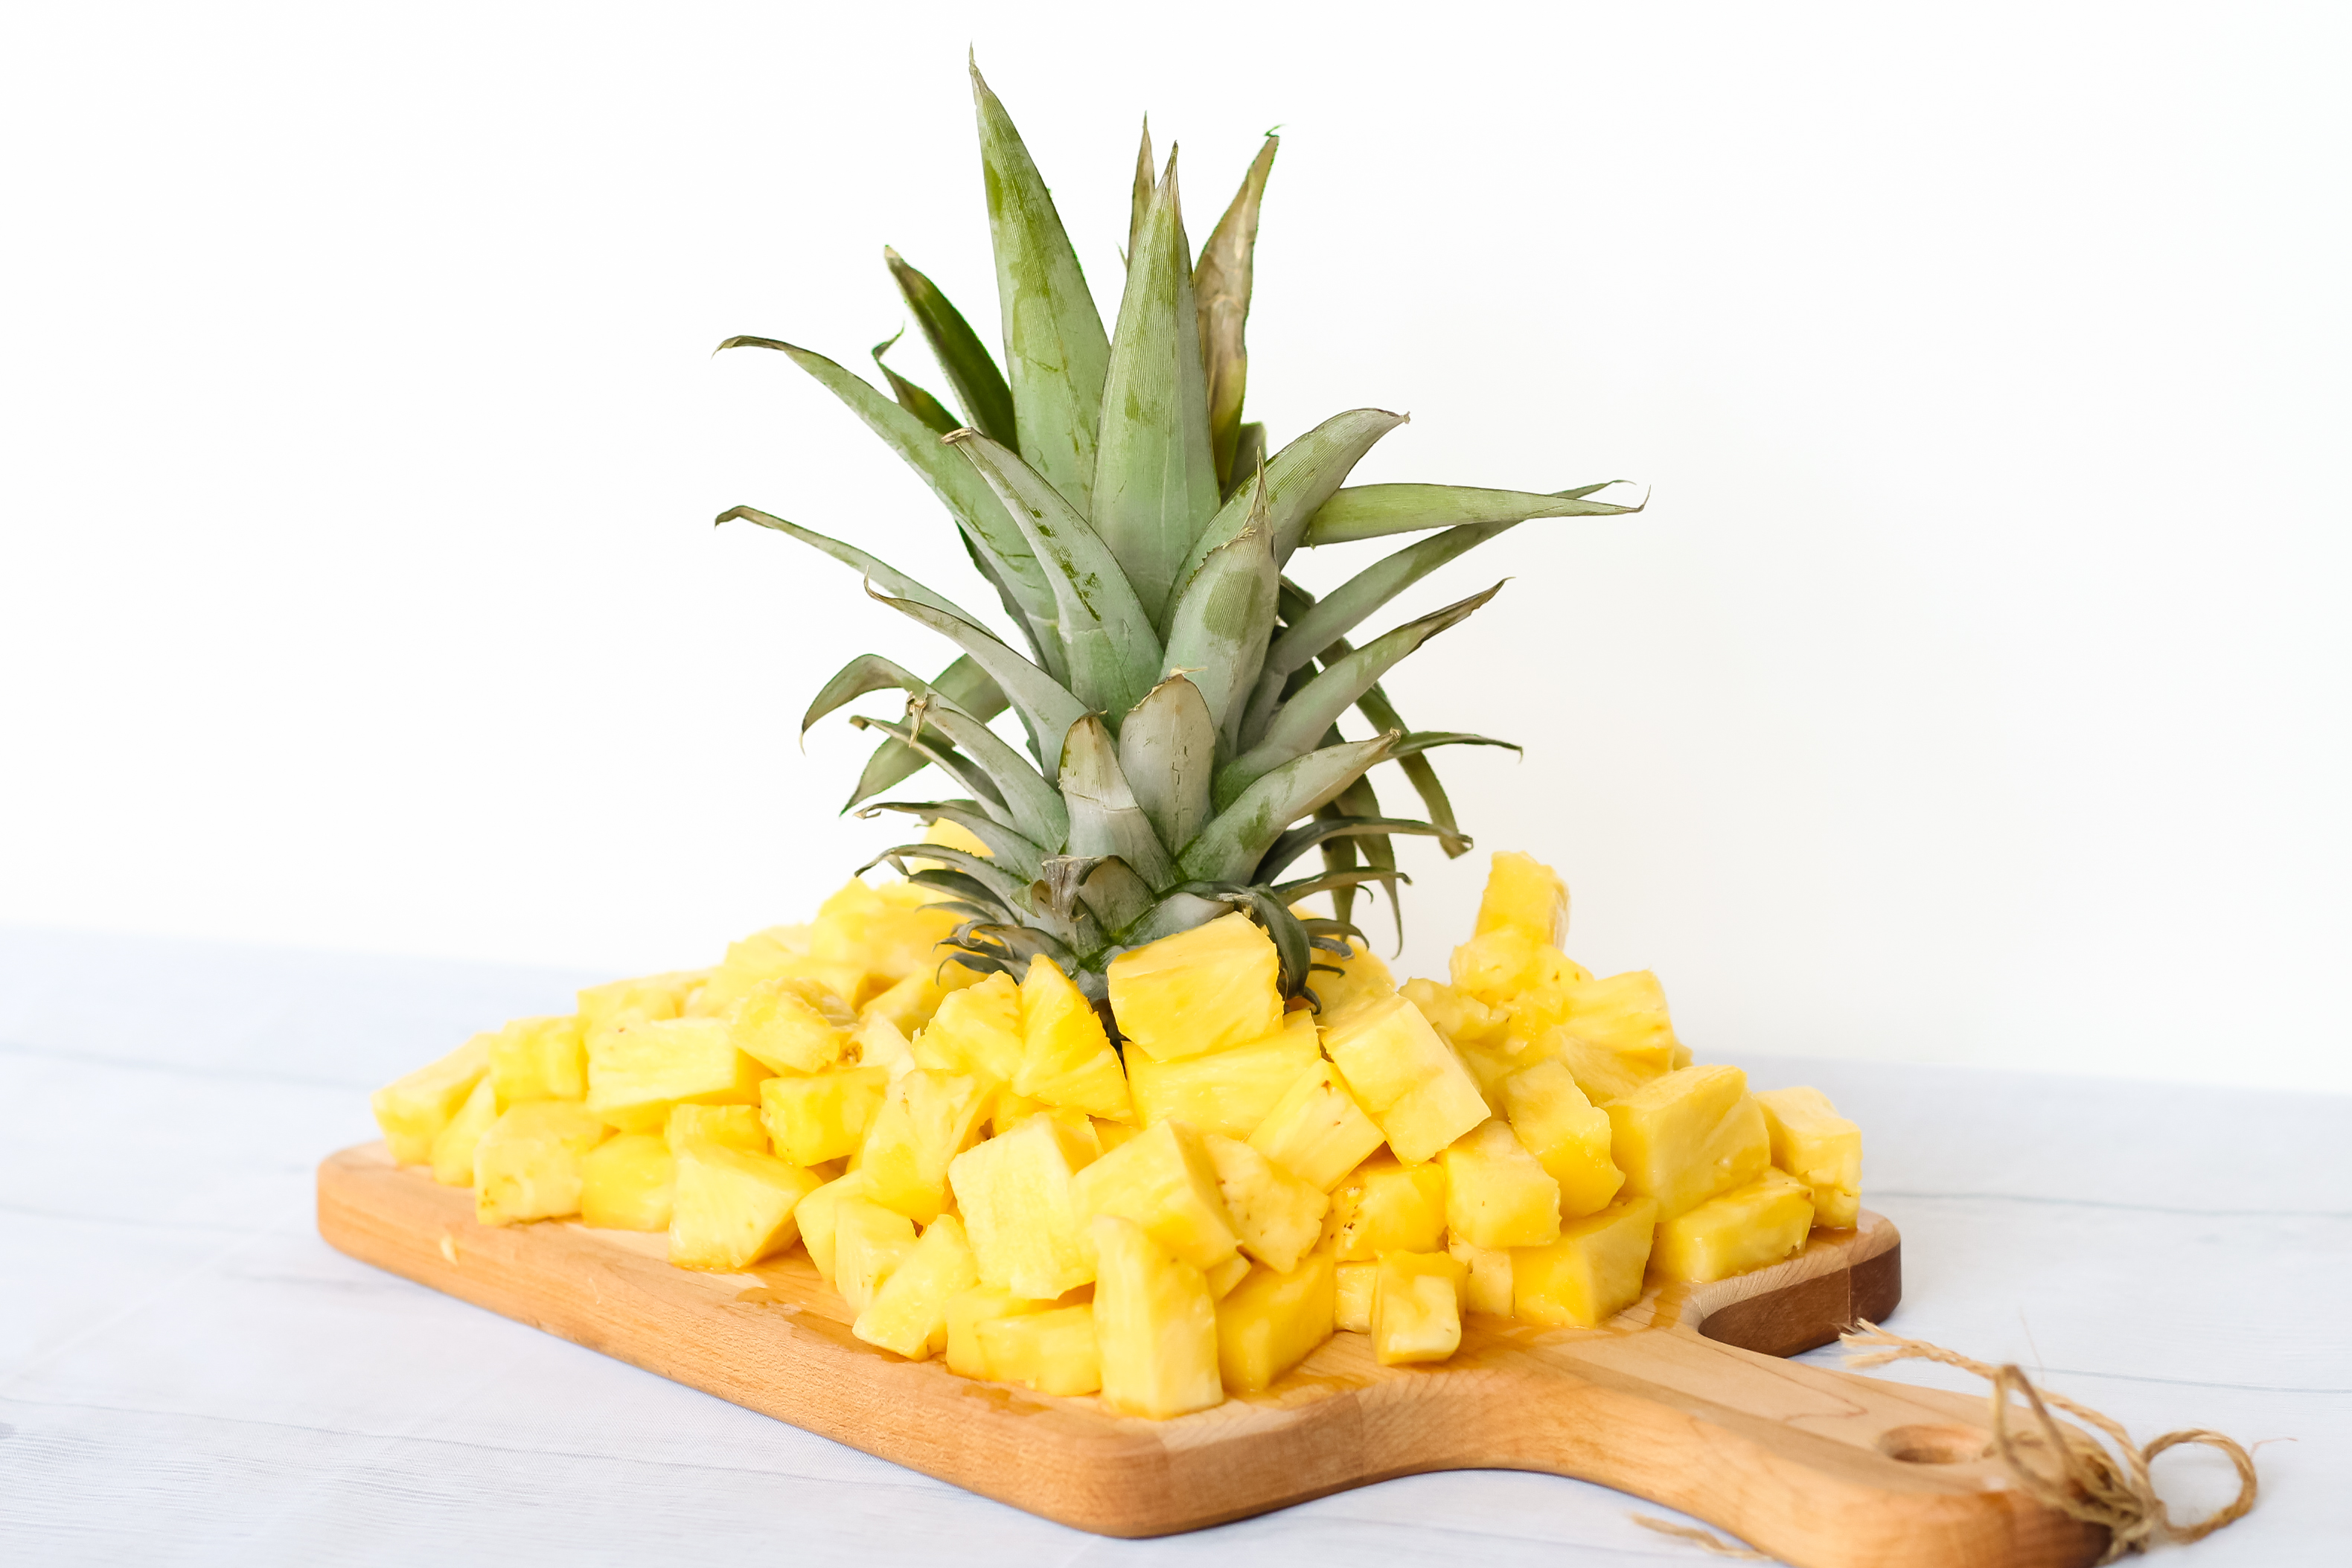 Asian pineapple cutting